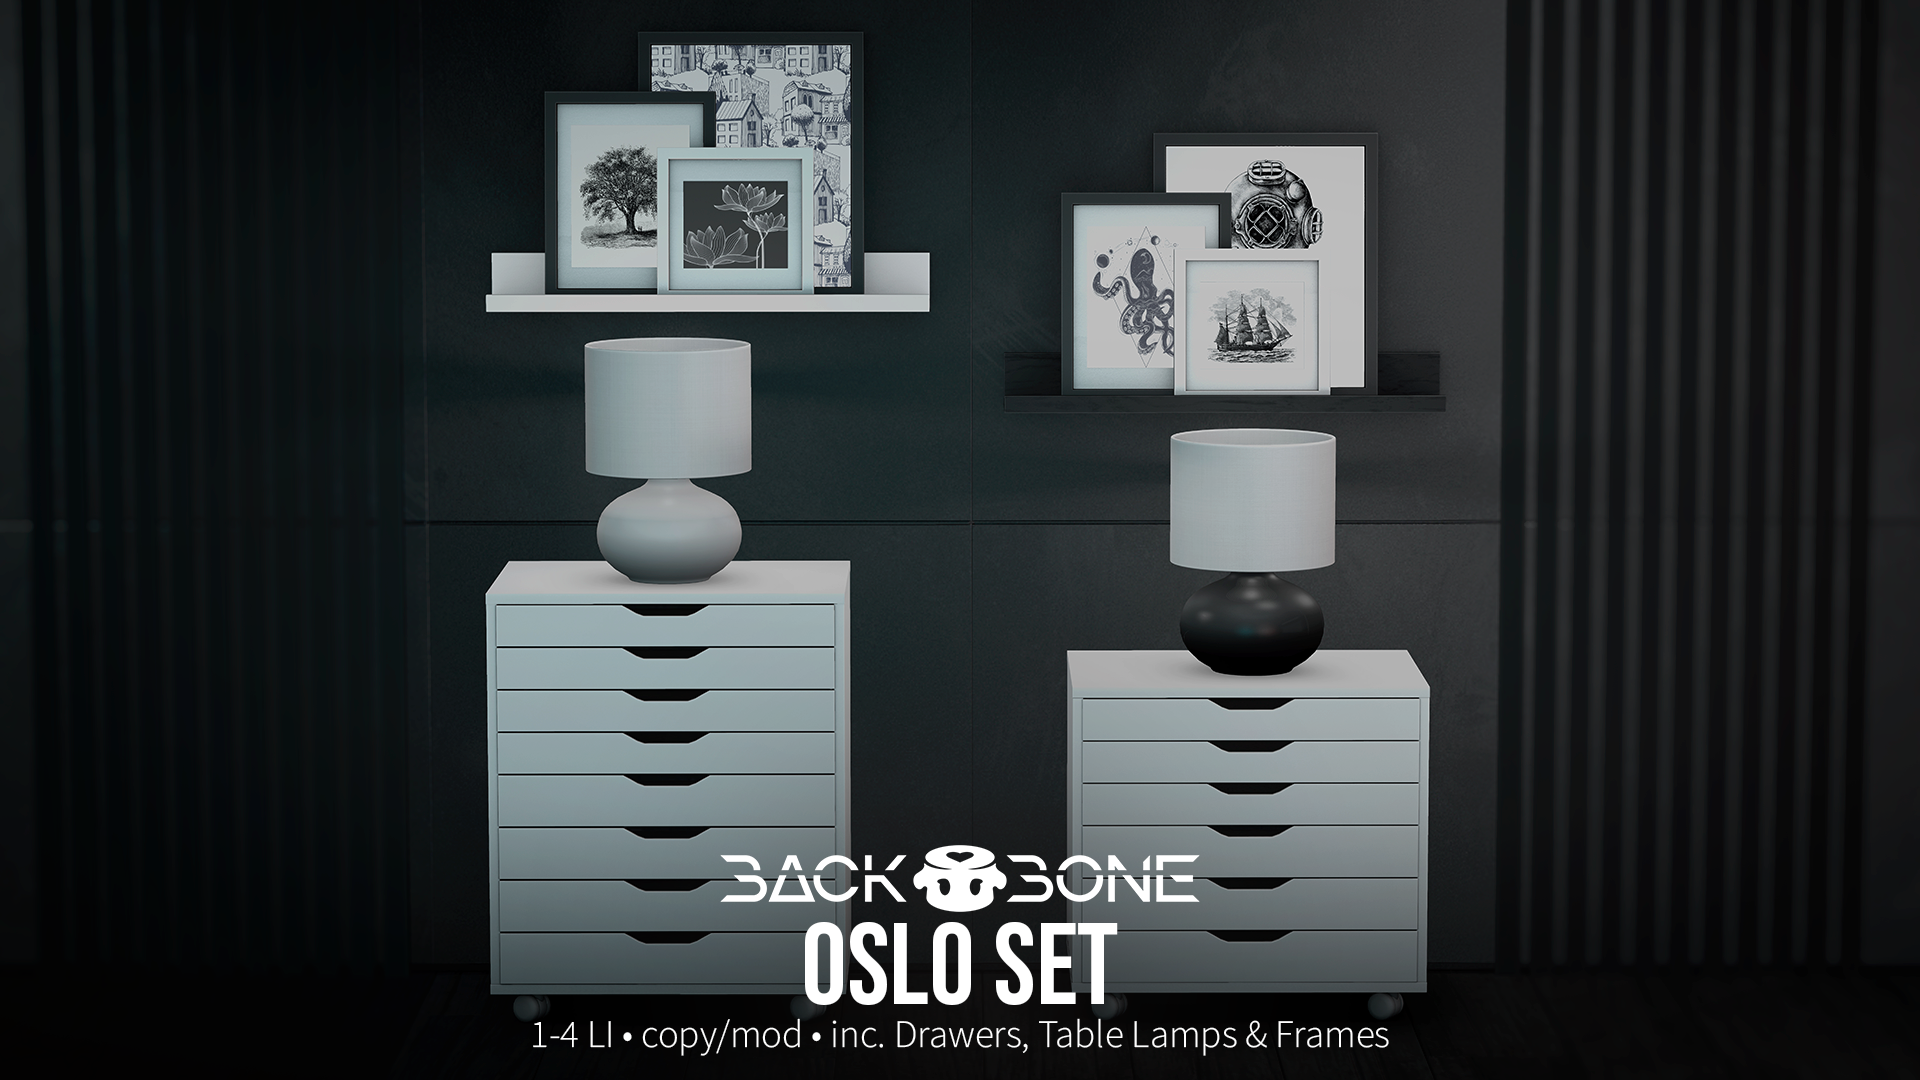 BackBone – Oslo Set